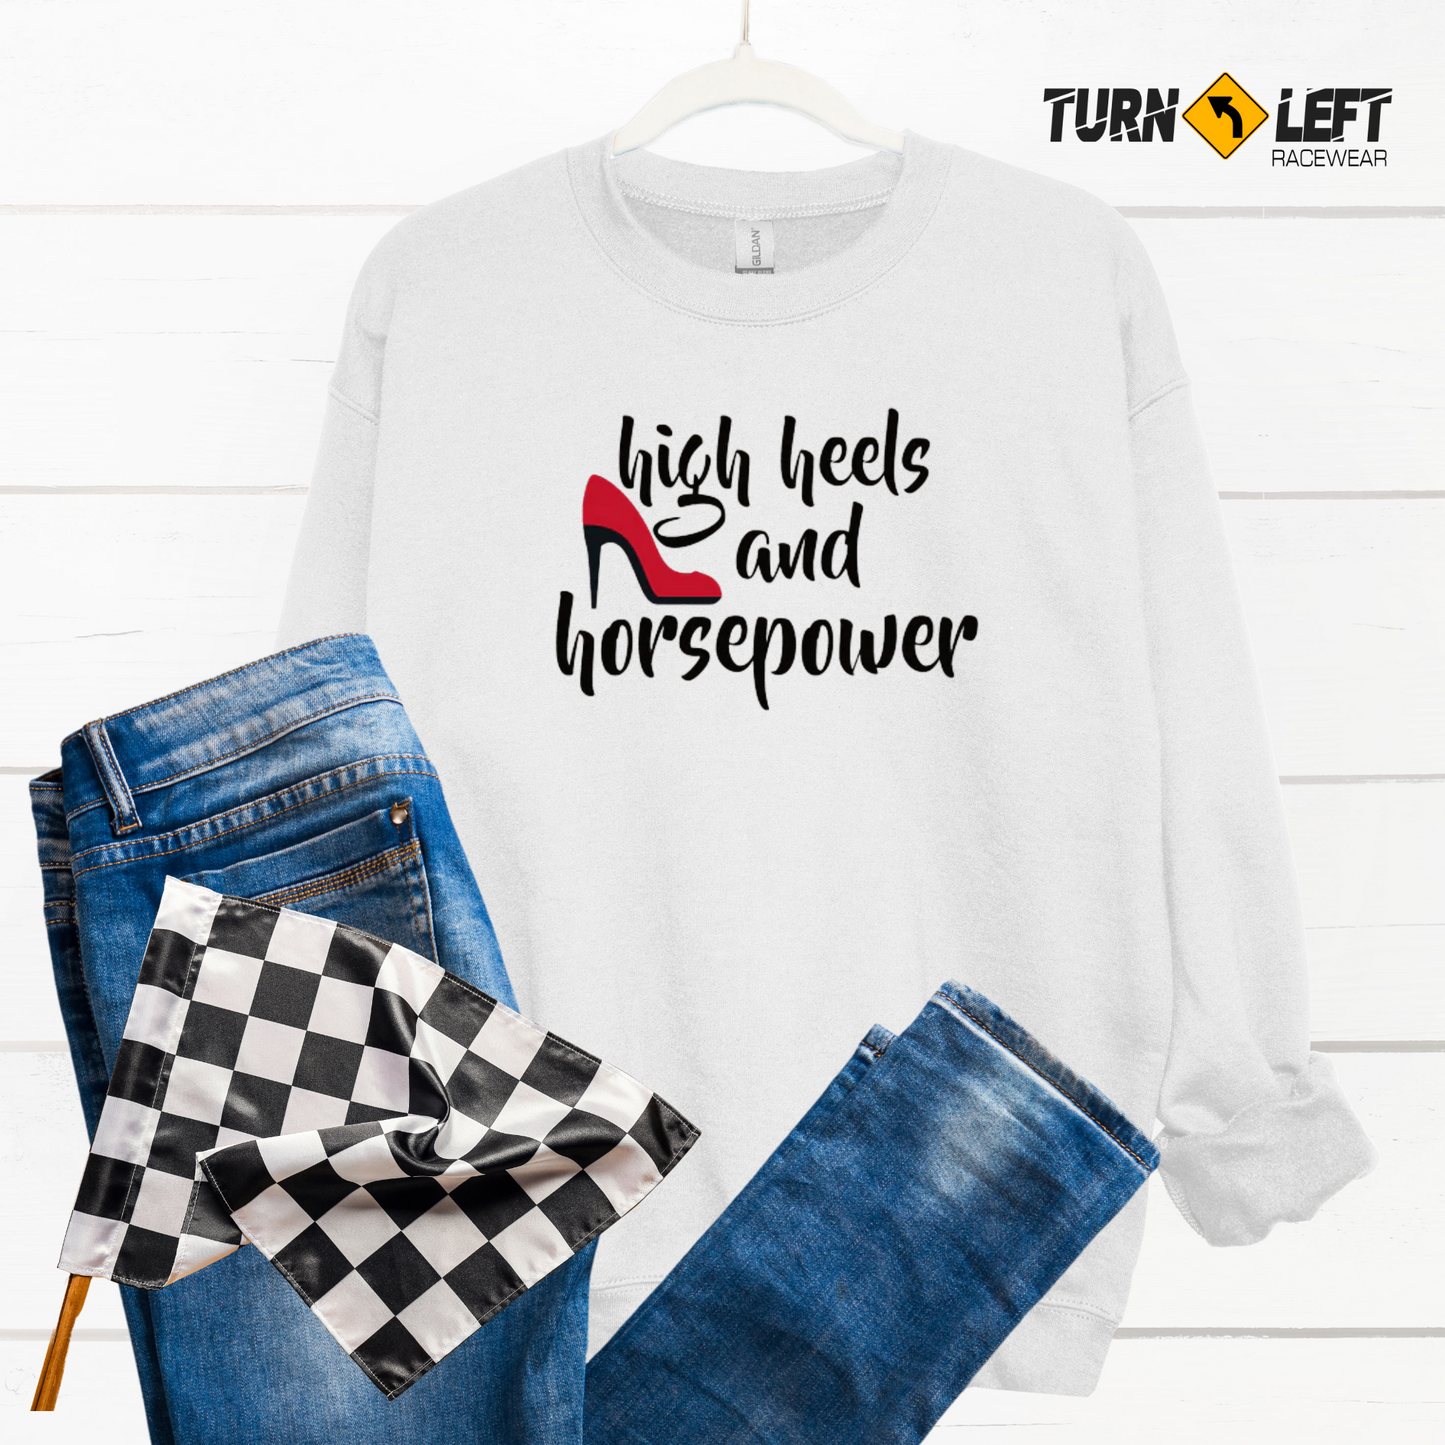 High Heels And Horsepower Women's Sweatshirt